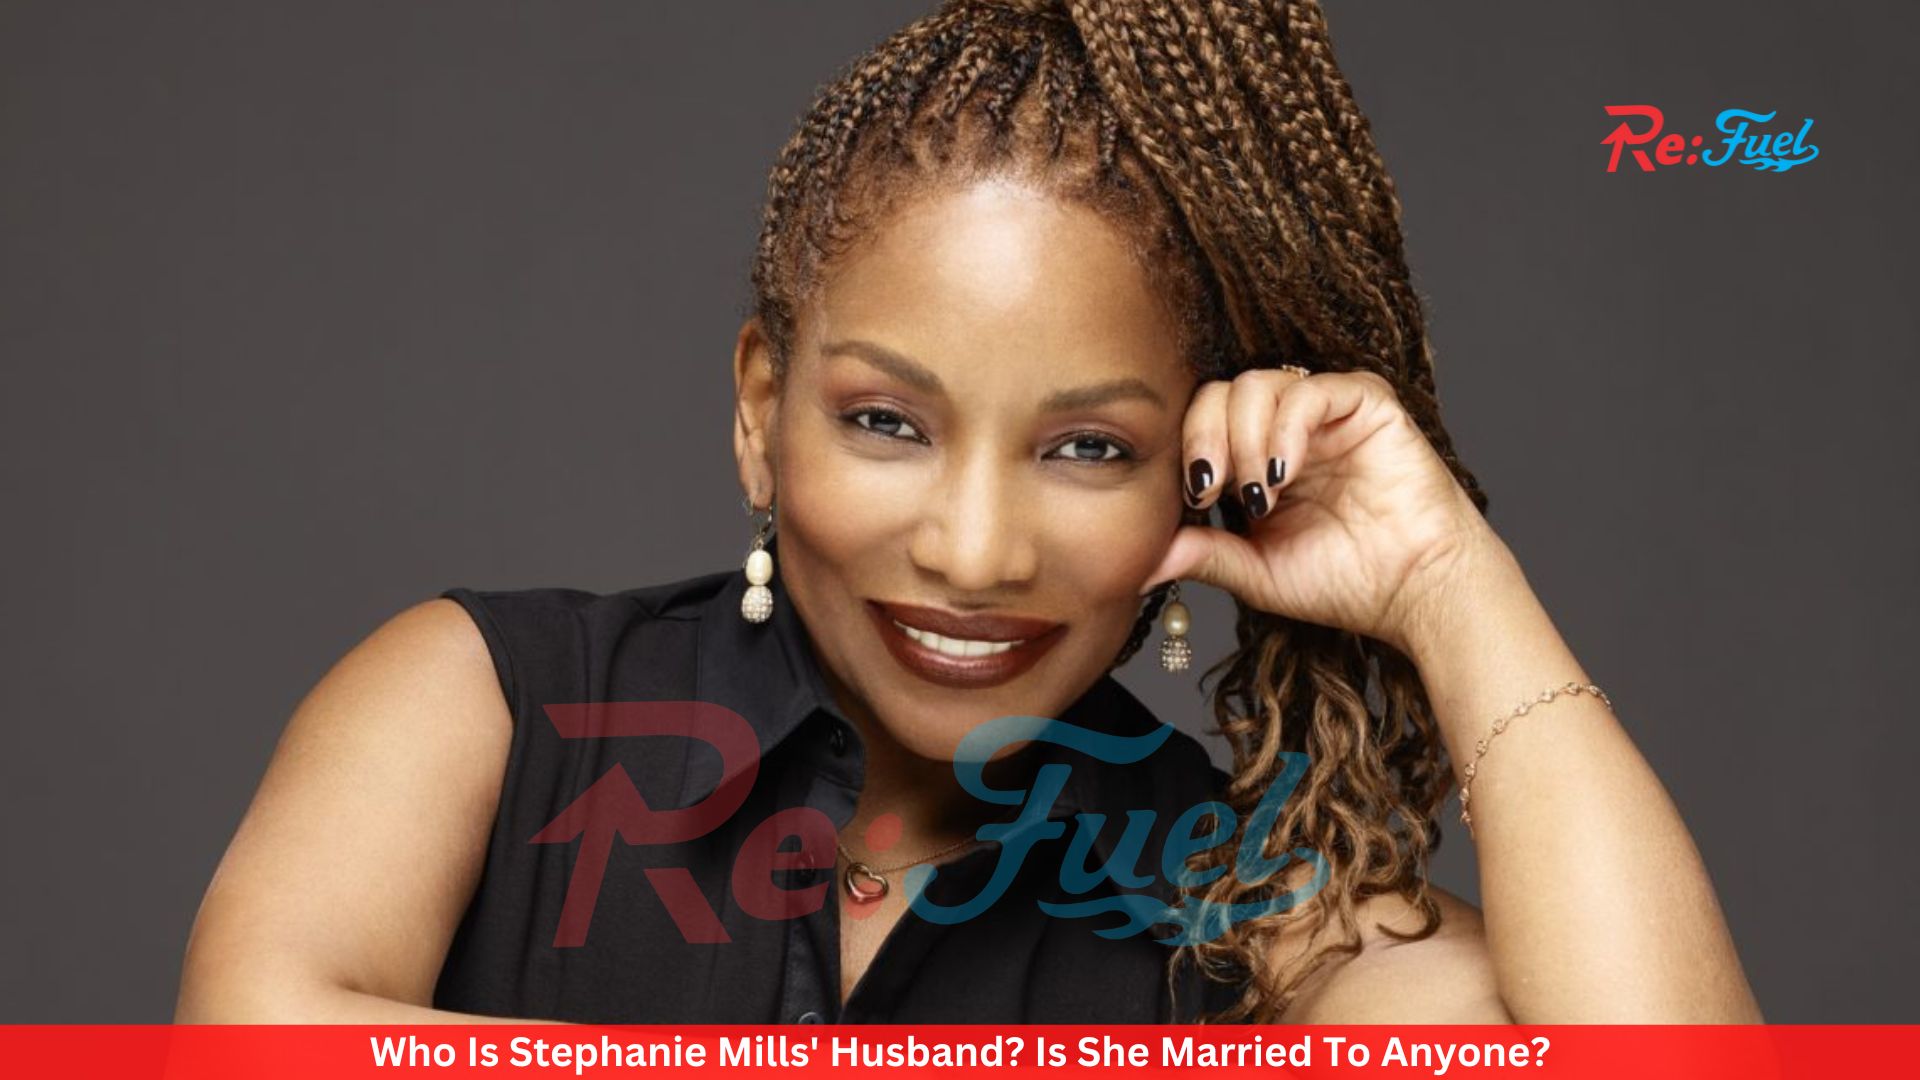 Who Is Stephanie Mills' Husband? Is She Married To Anyone?